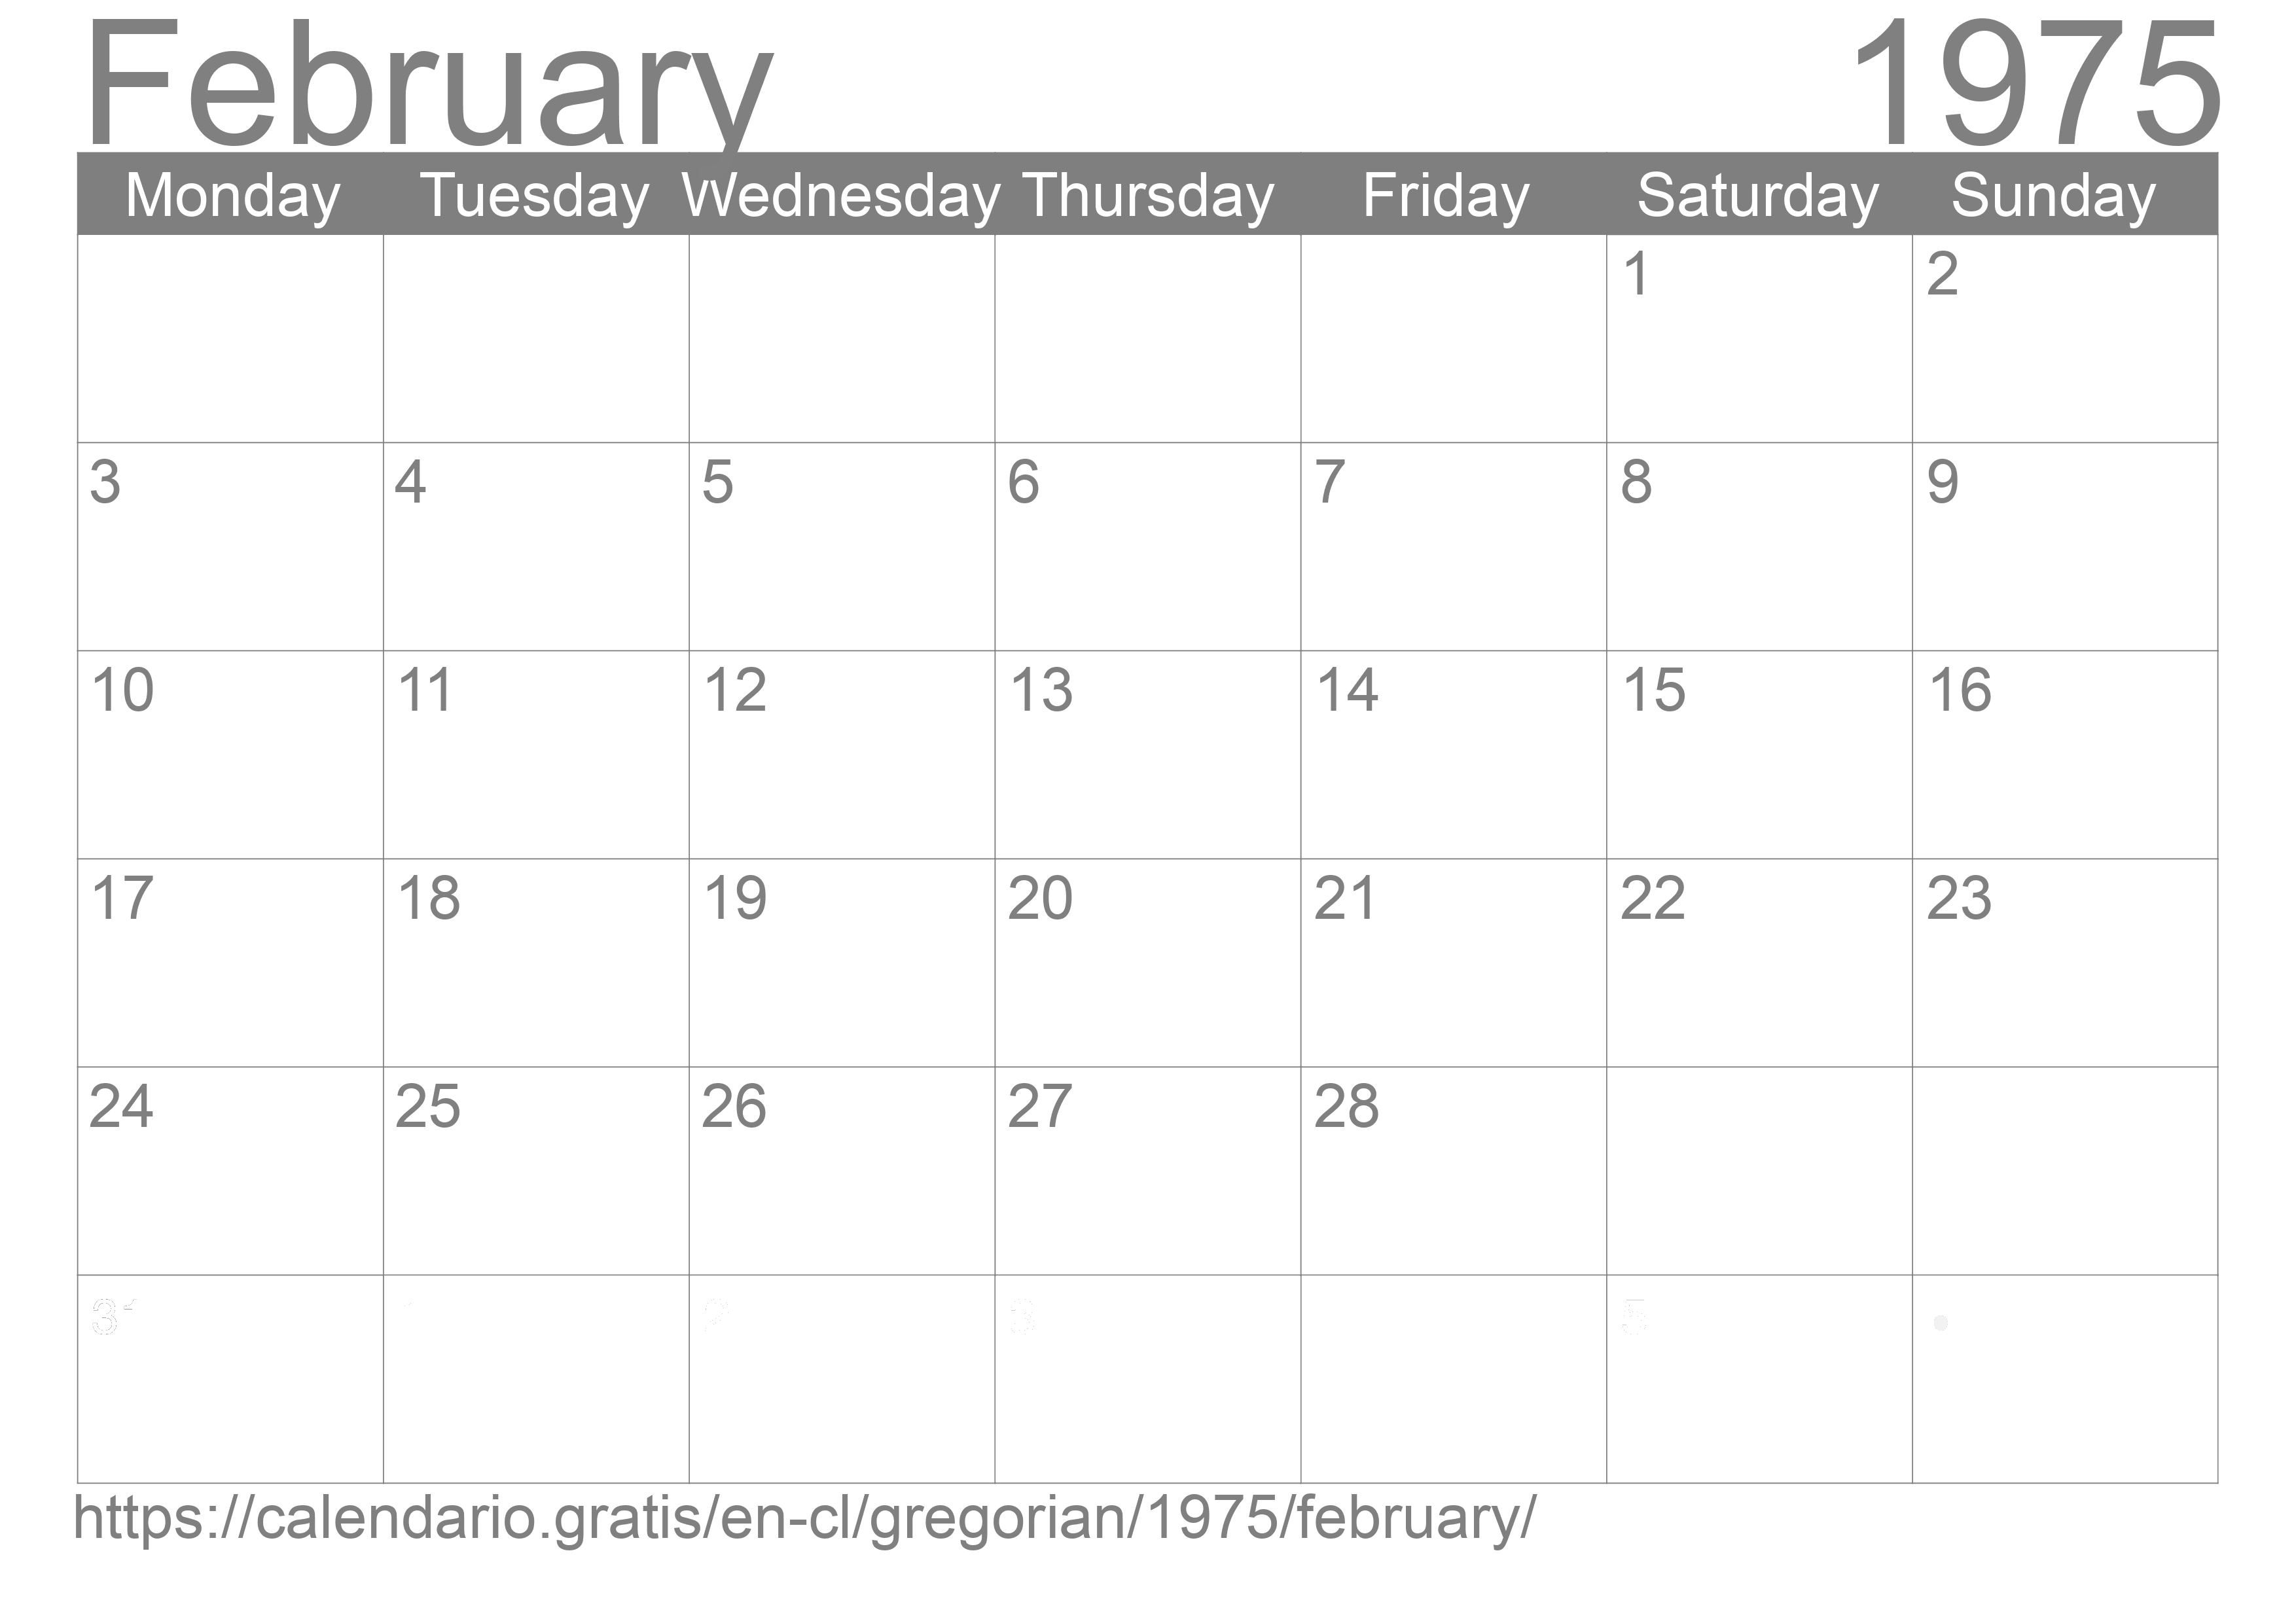 Calendar February 1975 to print